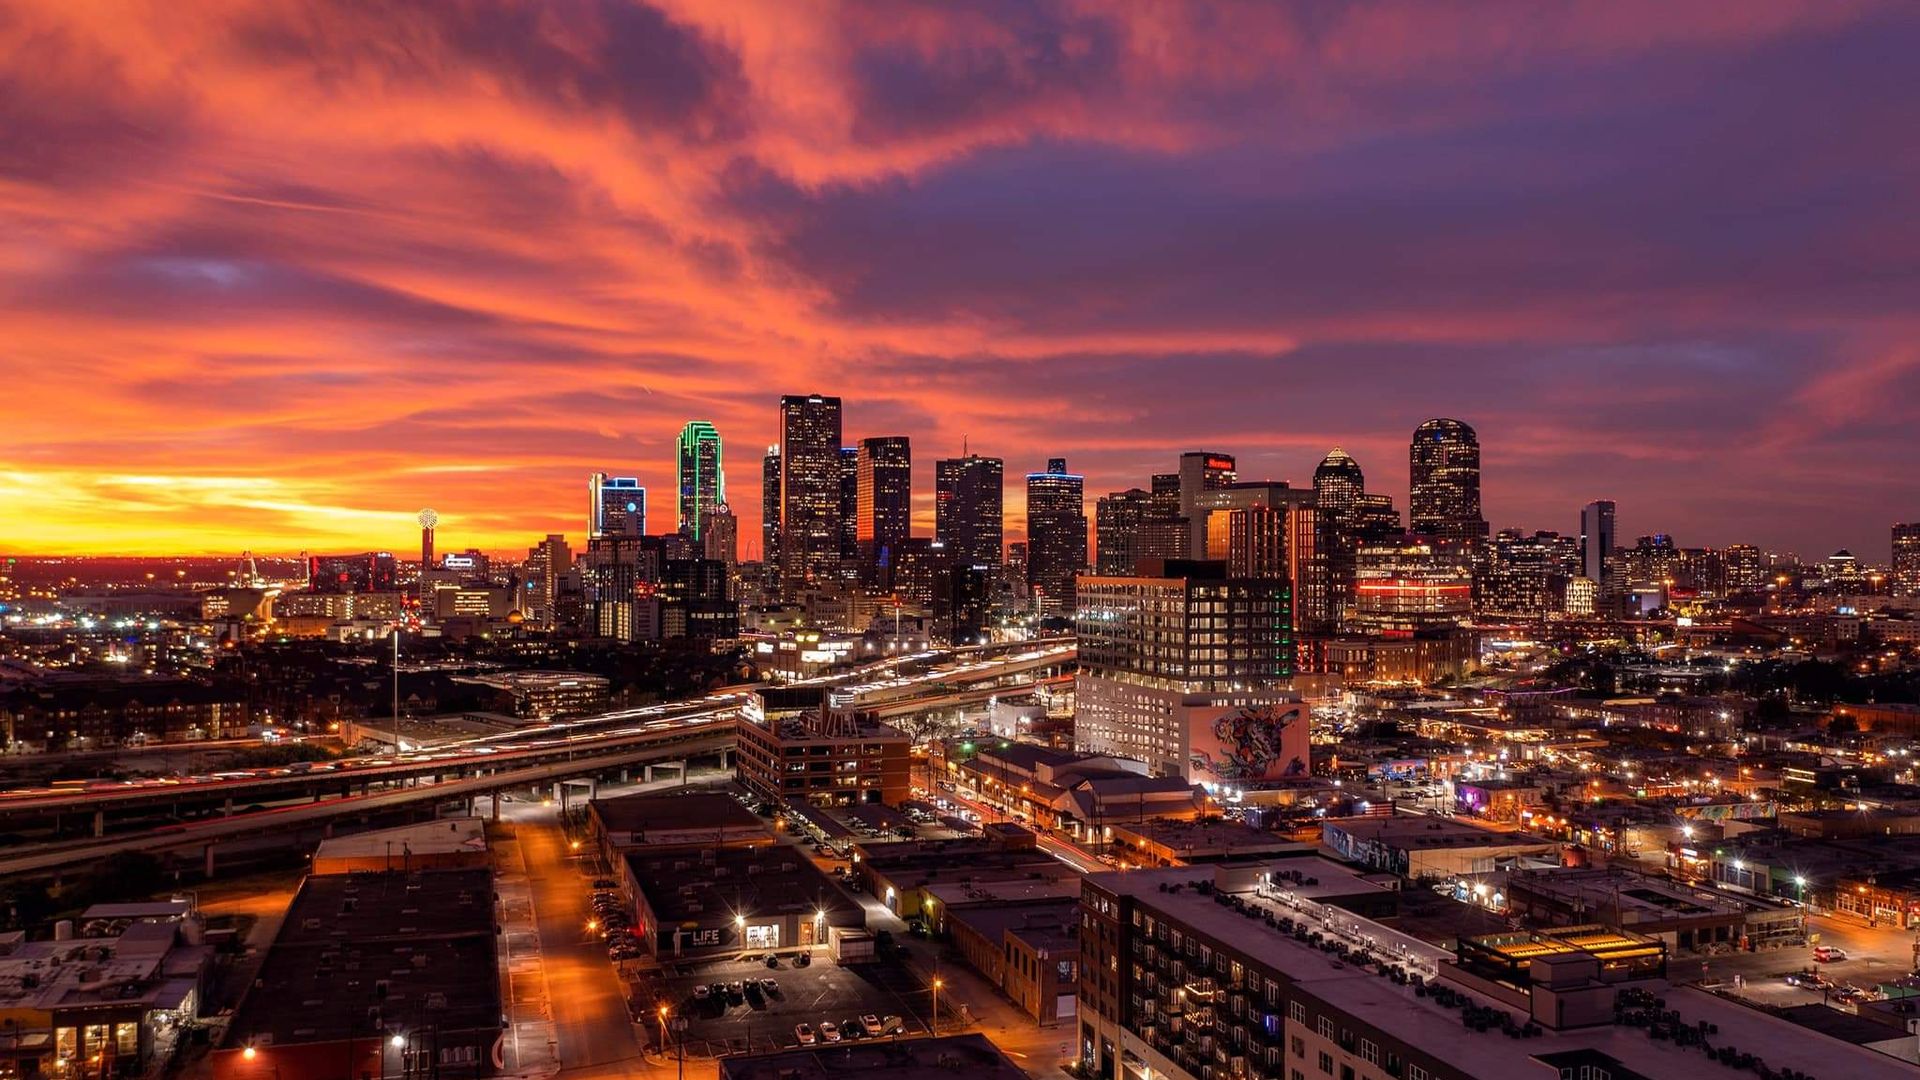 The Dallas skyline and a technicolor sunset